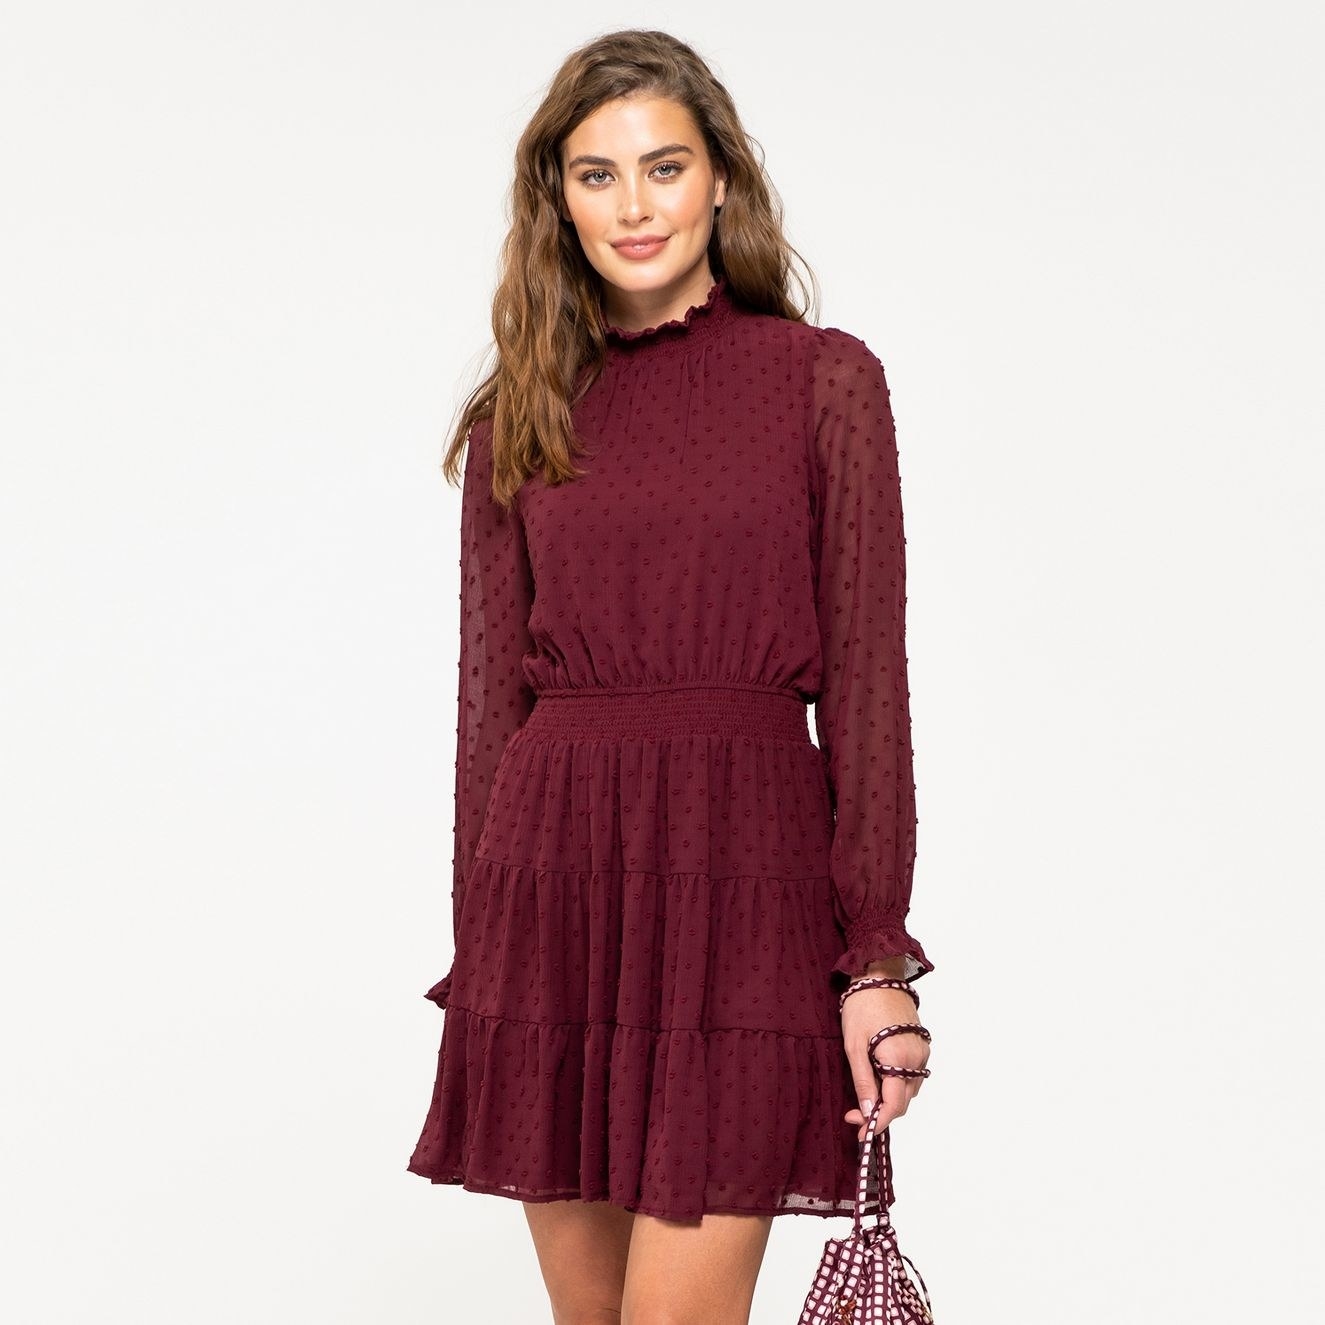 Model wearing the burgundy dress